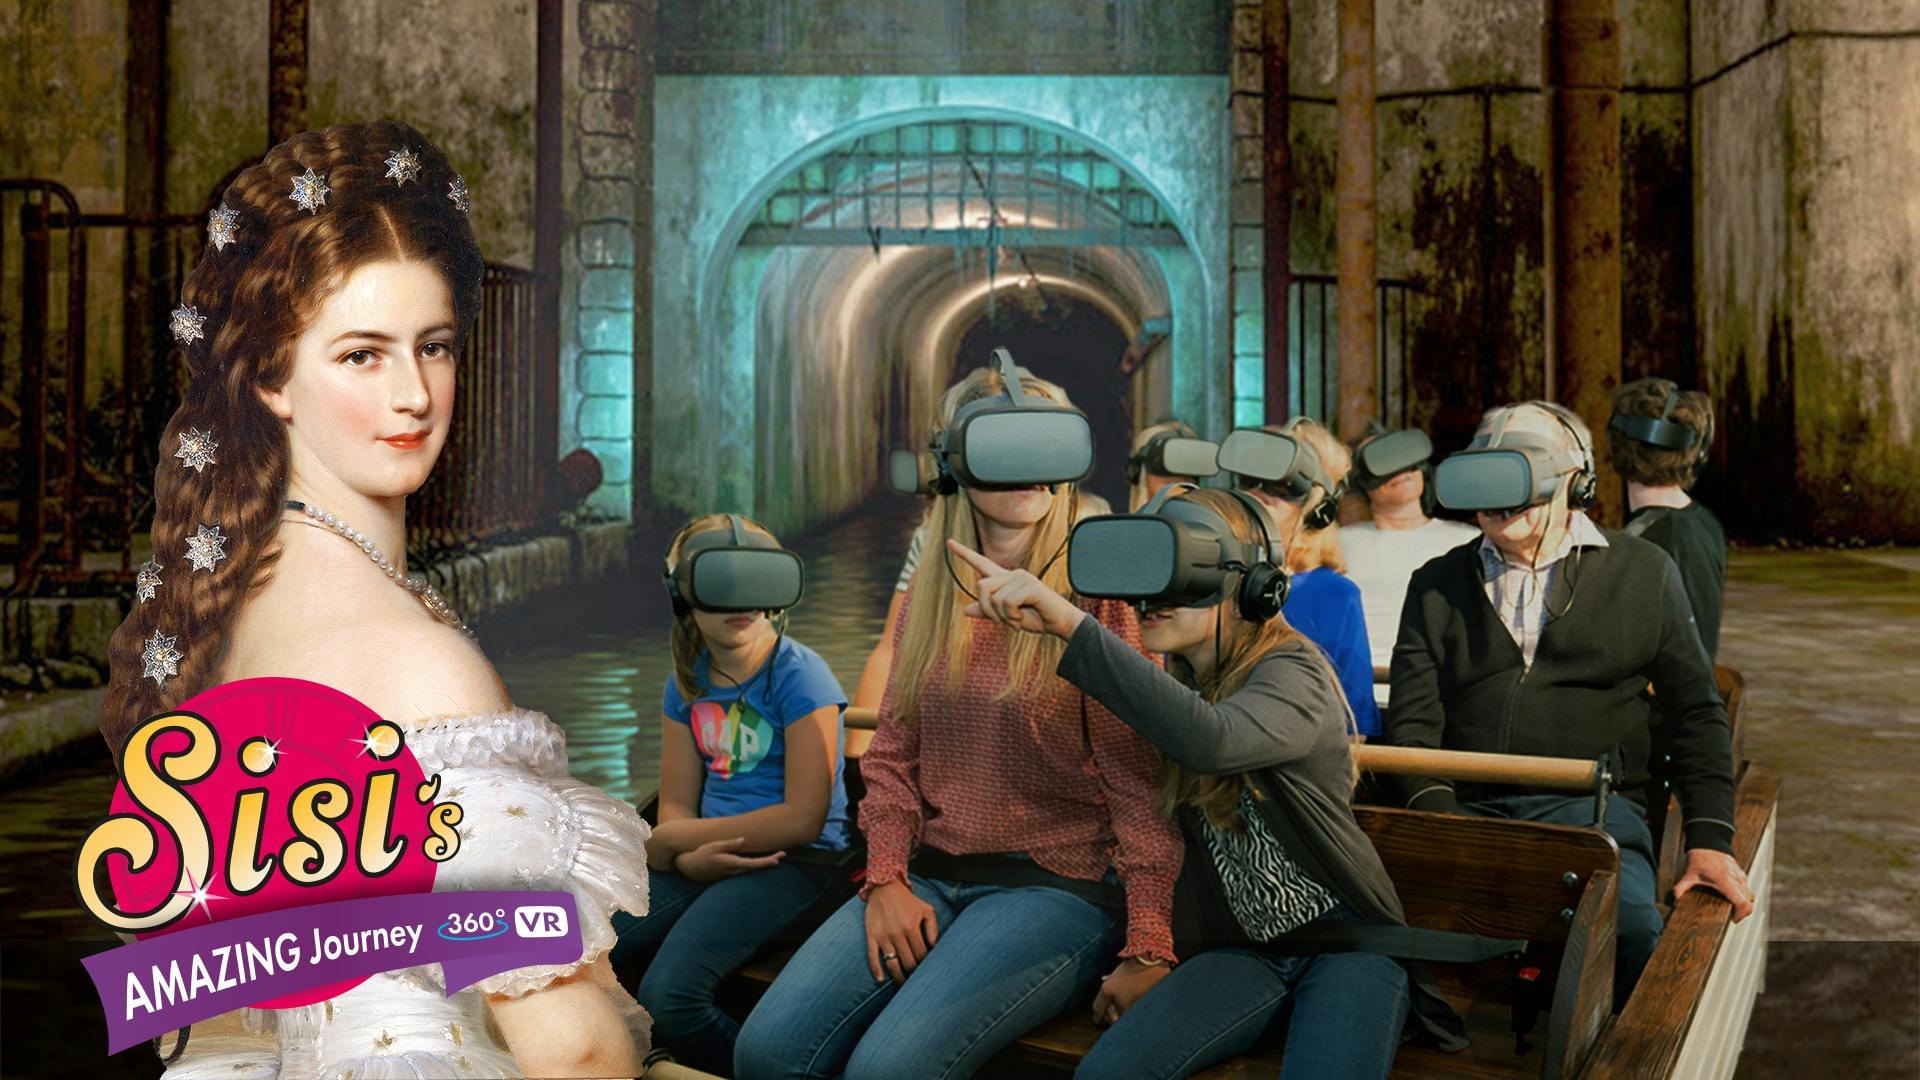 Sisi's amazing journey virtual reality boat ride